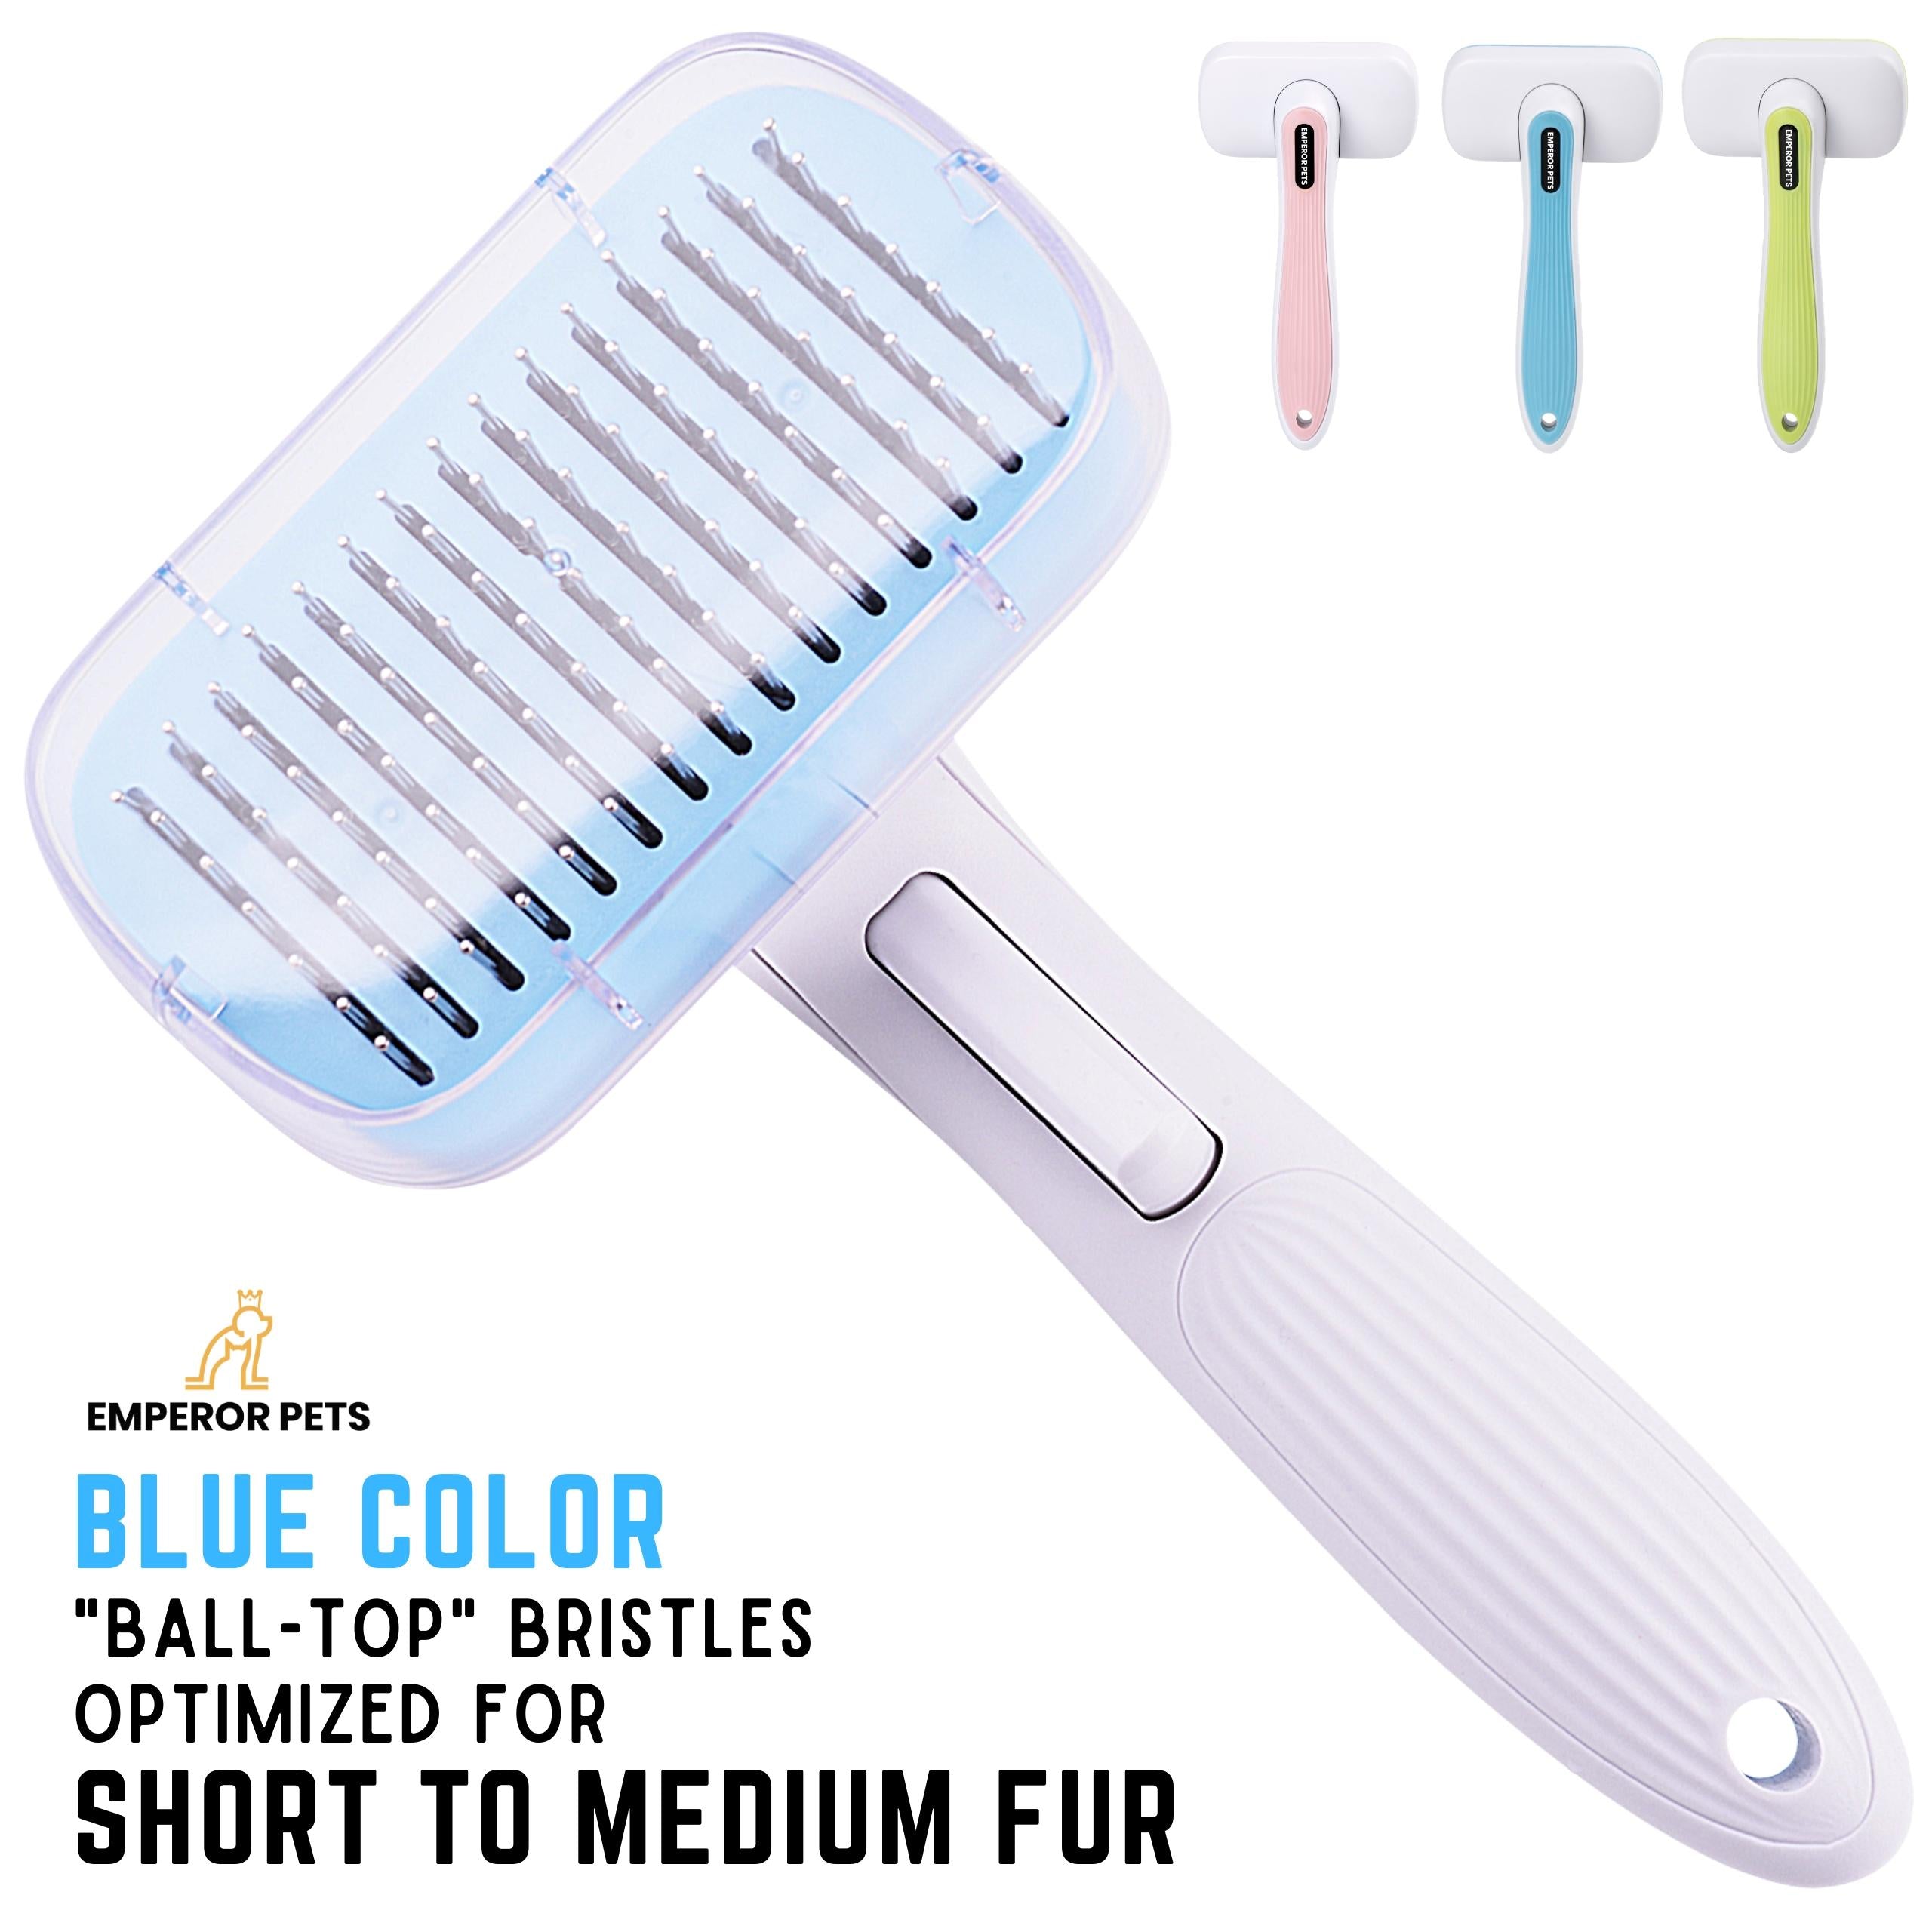 Emperor Pets Self Cleaning Pet Fur Slicker Brush for Short Fur Pets, Dog Brush, Cat Brush, Blue Color - Image 1 Main